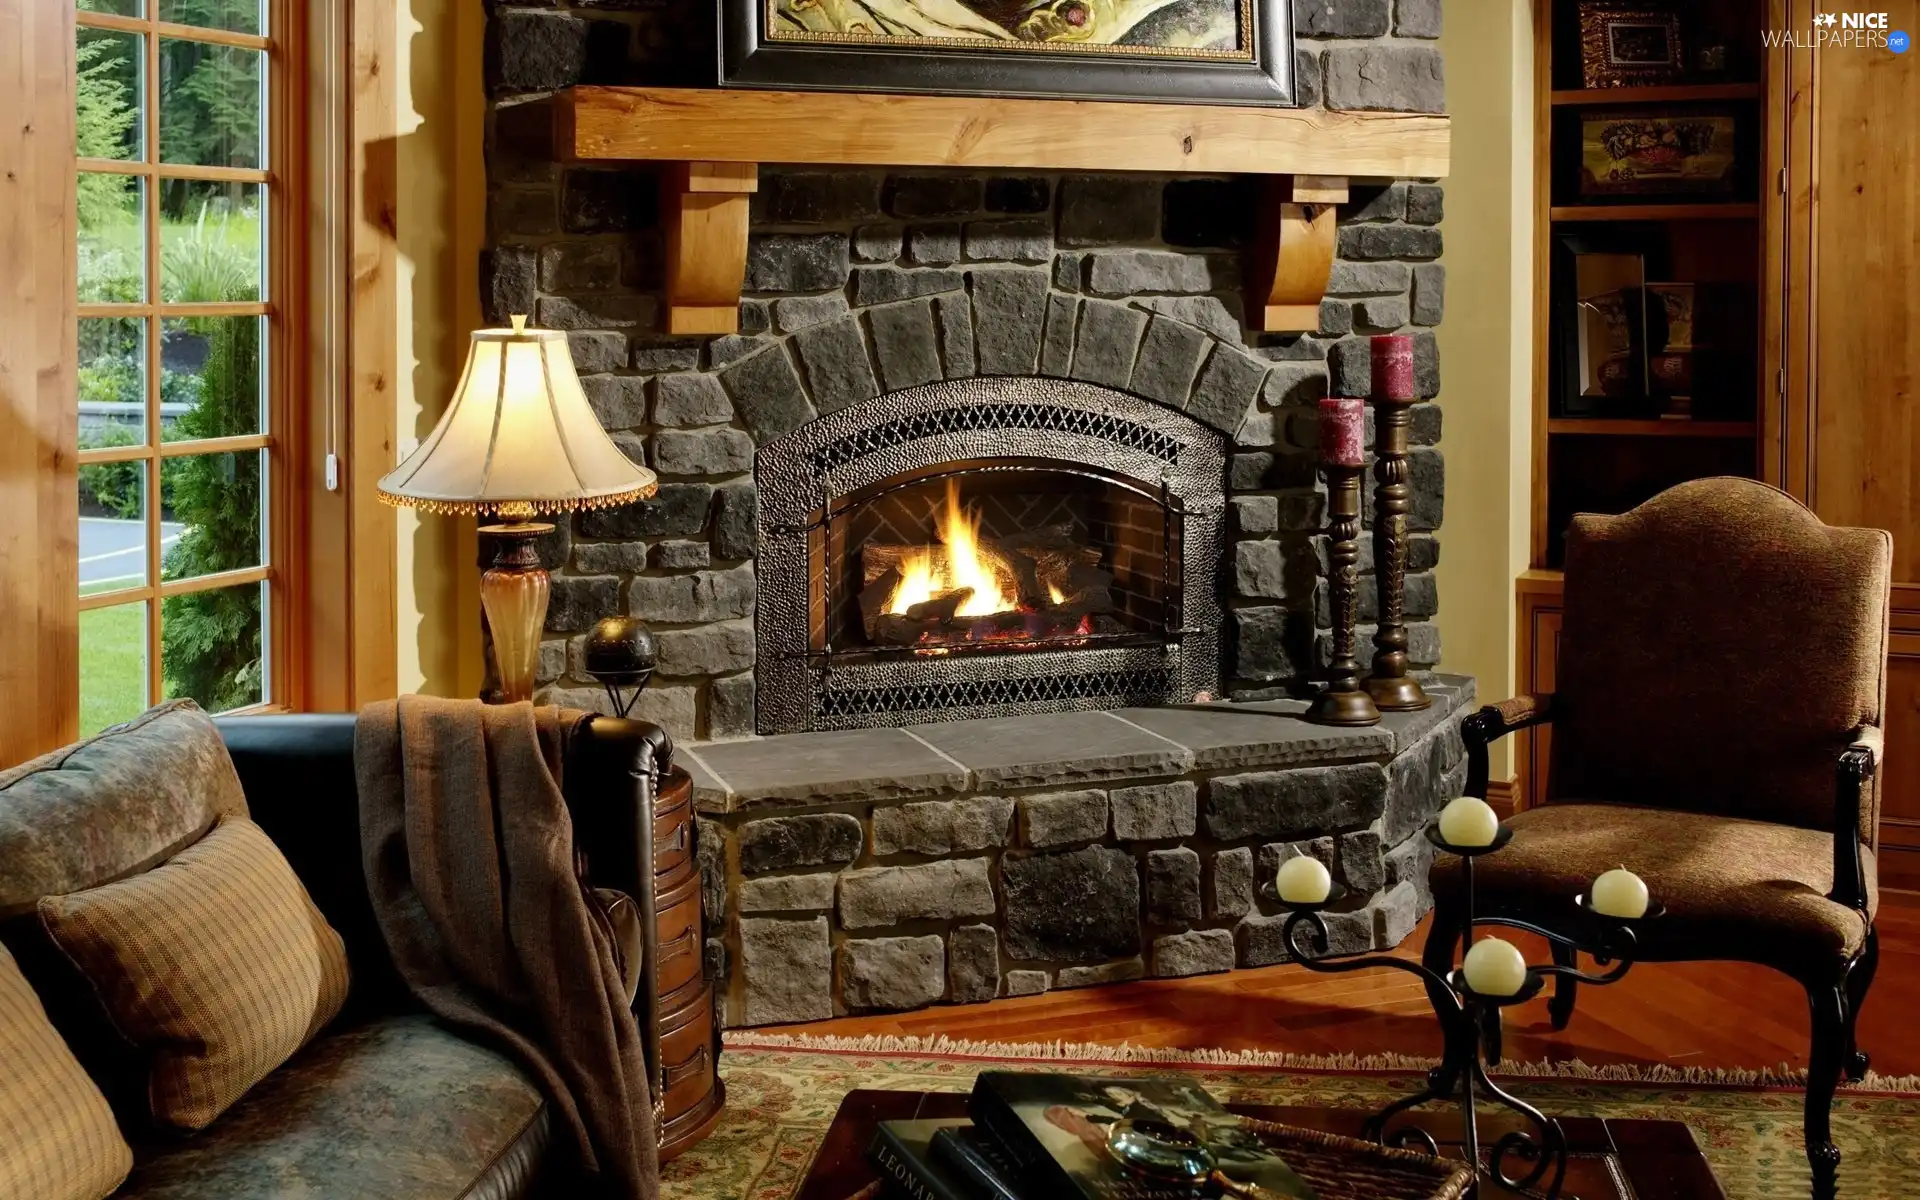 burner chimney, furniture, peace, guest, interior